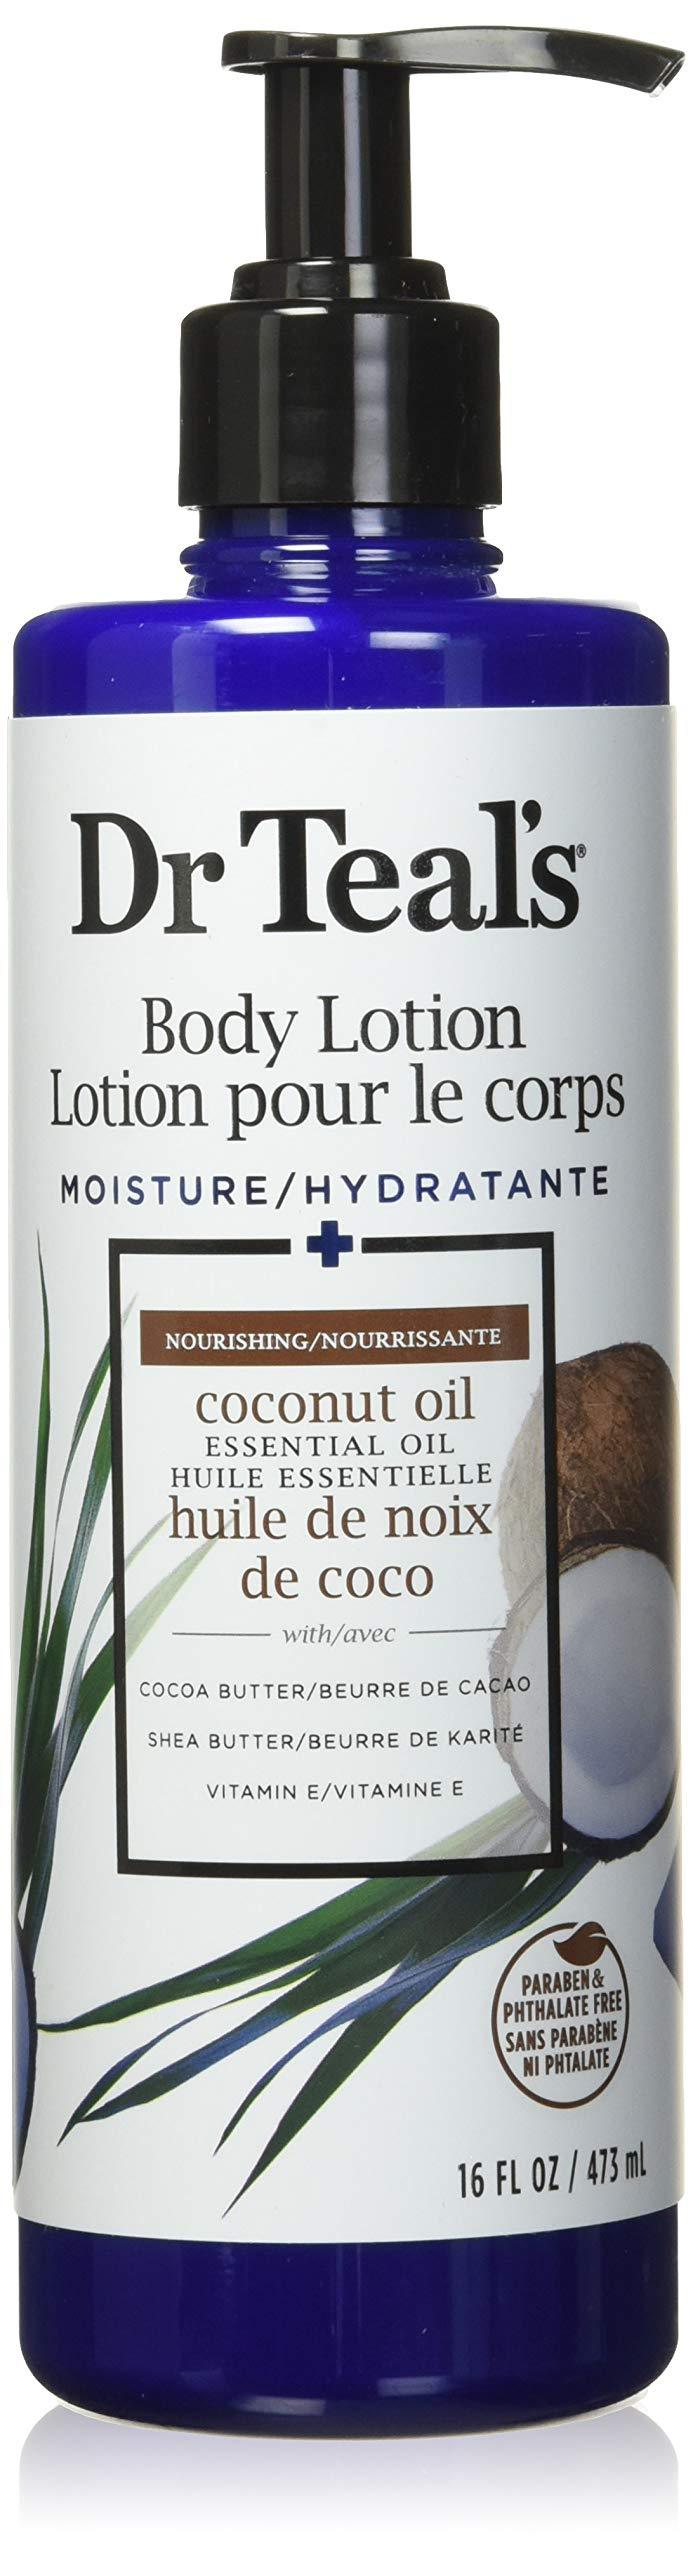 [Australia] - Dr Teal's Body Lotion Moisture plus Nourishing Coconut Oil, 16 fl oz 